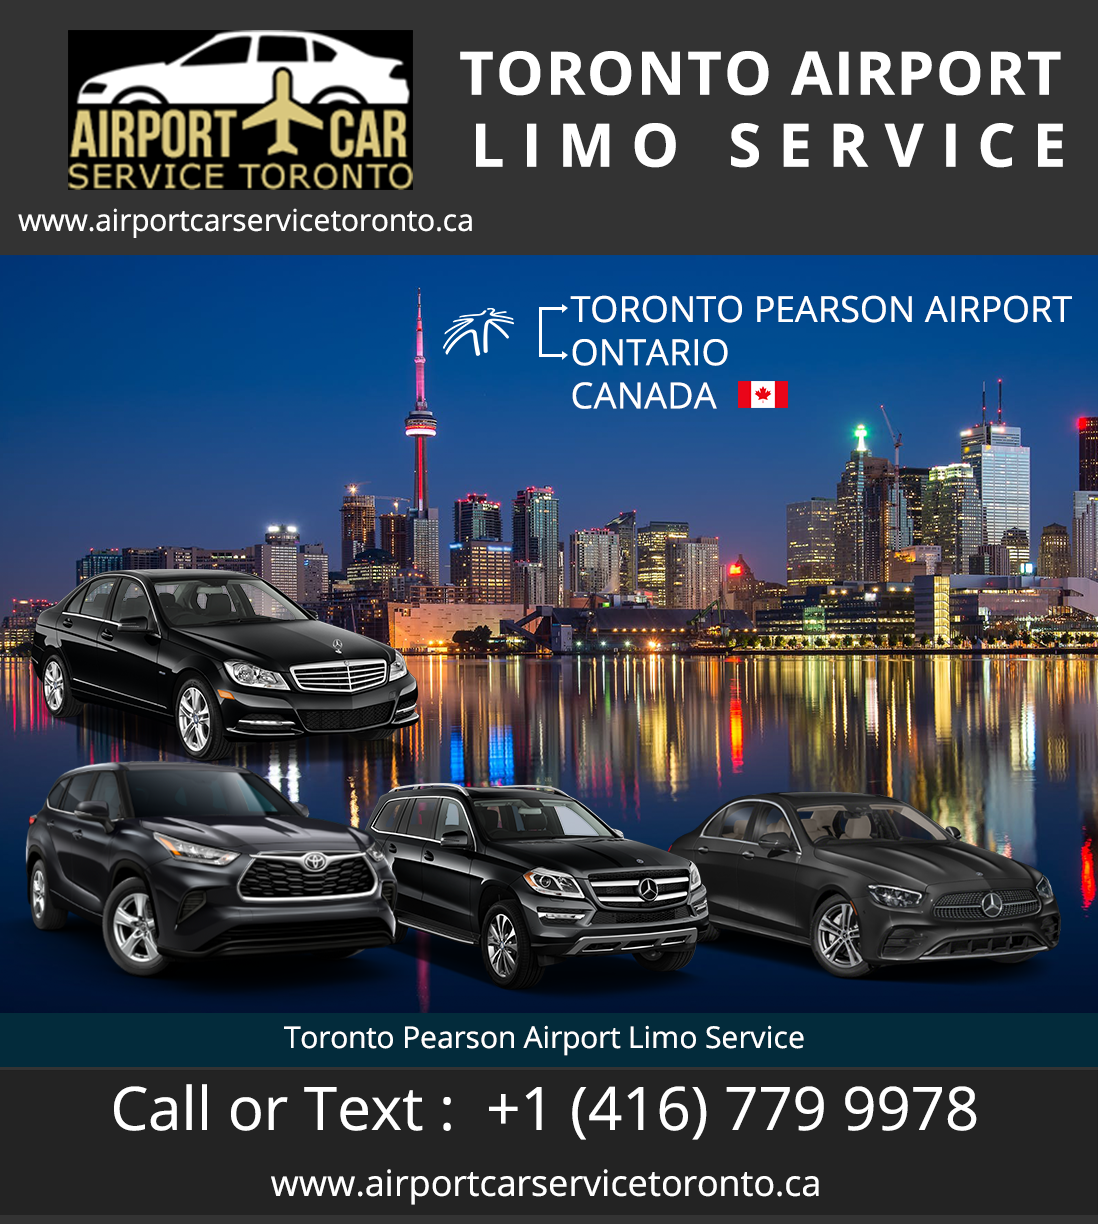 Airport Car Service Toronto